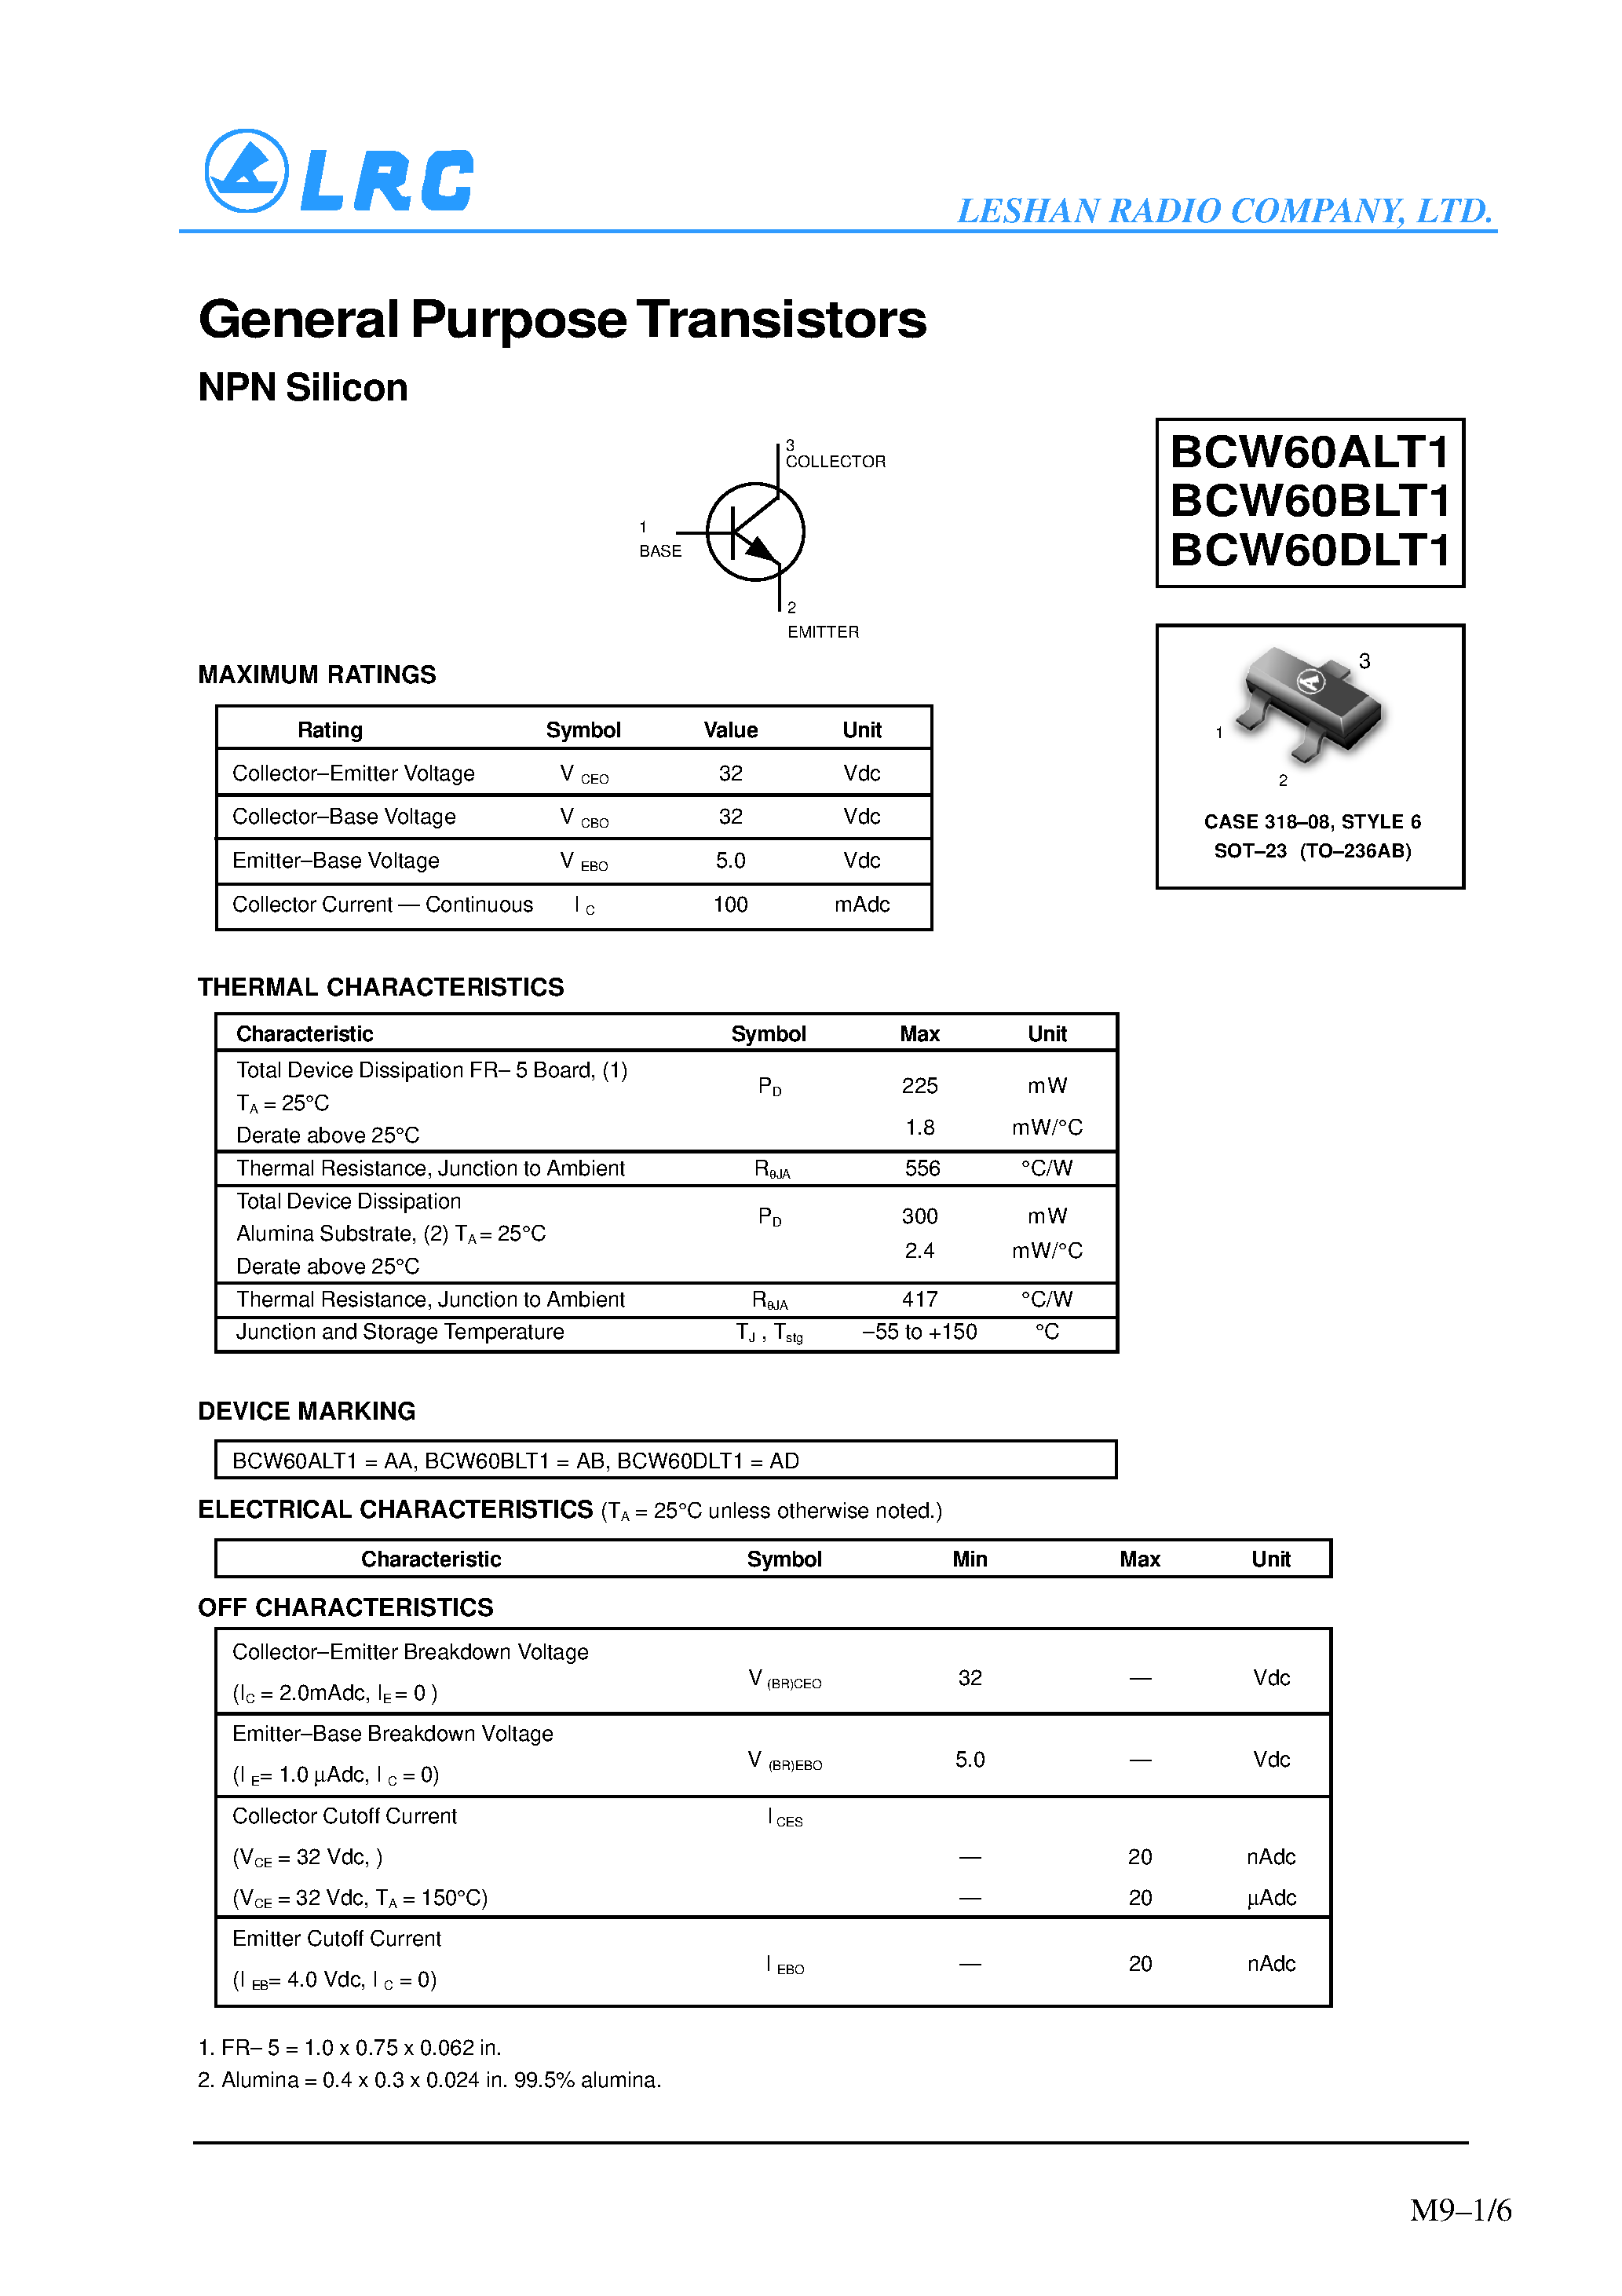 Datasheet BCWALT1 - General Purpose Transistors(NPN Silicon) page 1